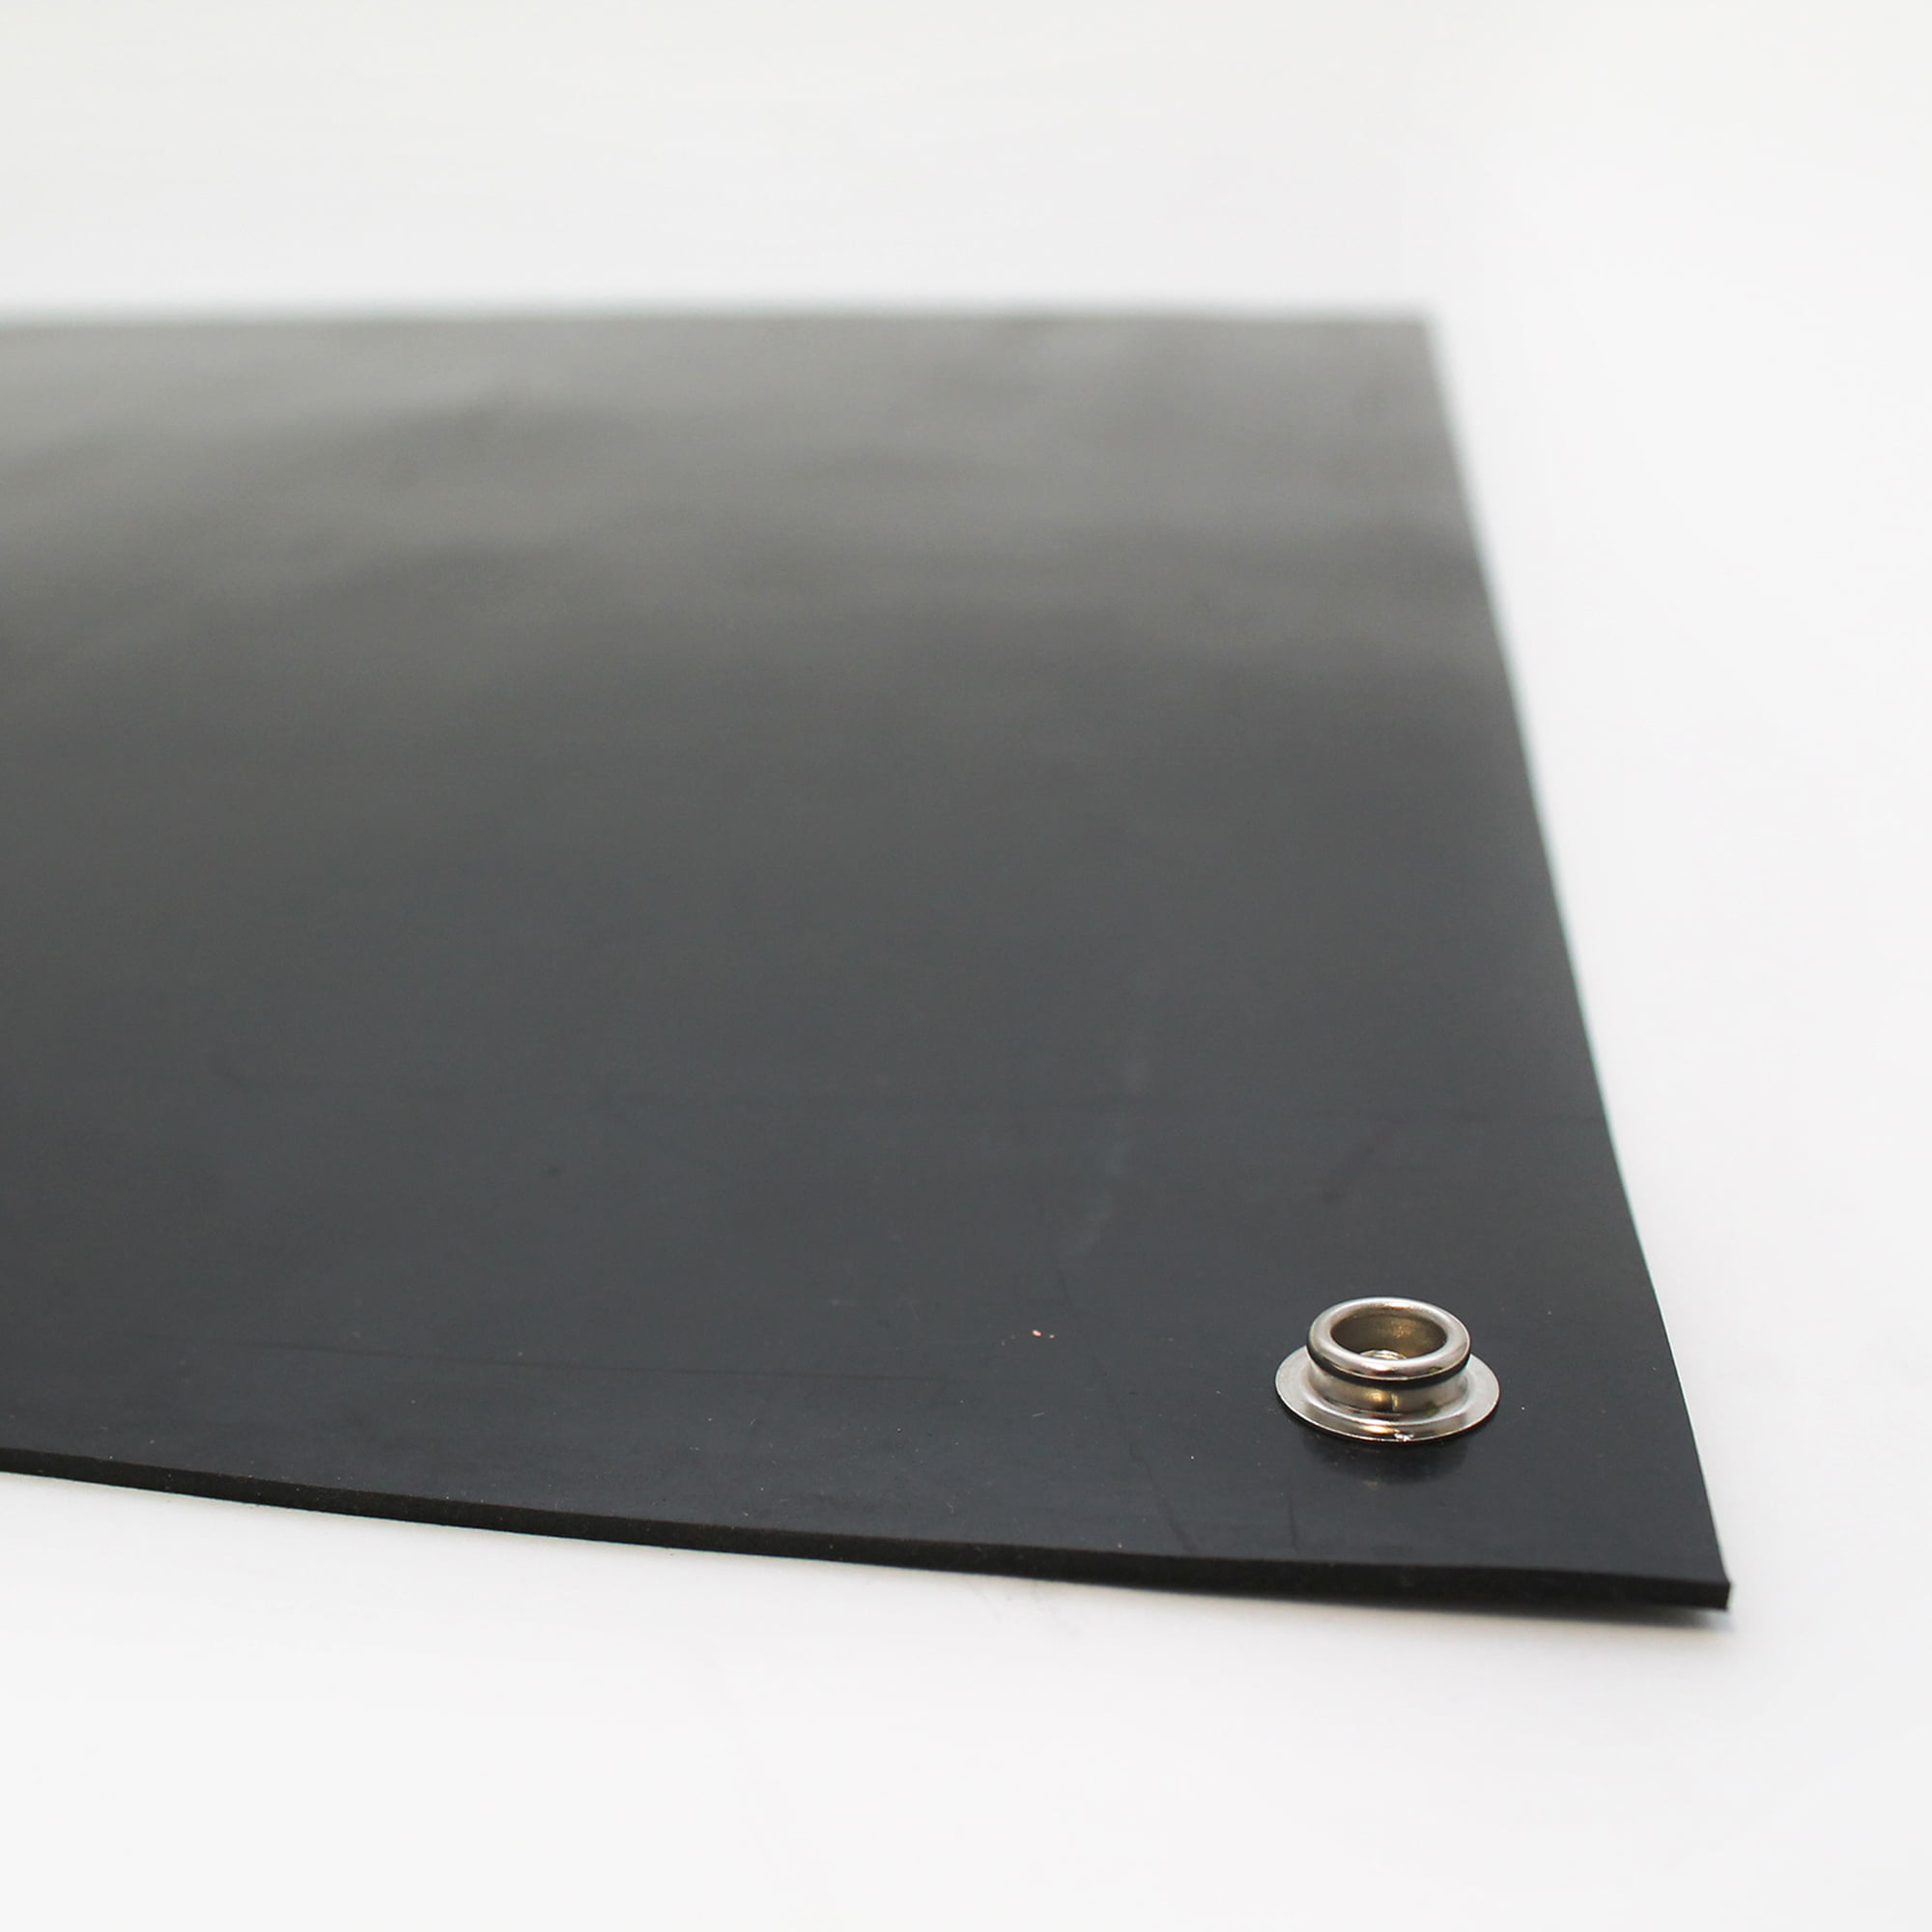 Close-up-corner-image-of-a-black- Conductive-neoprene-rubber-mat